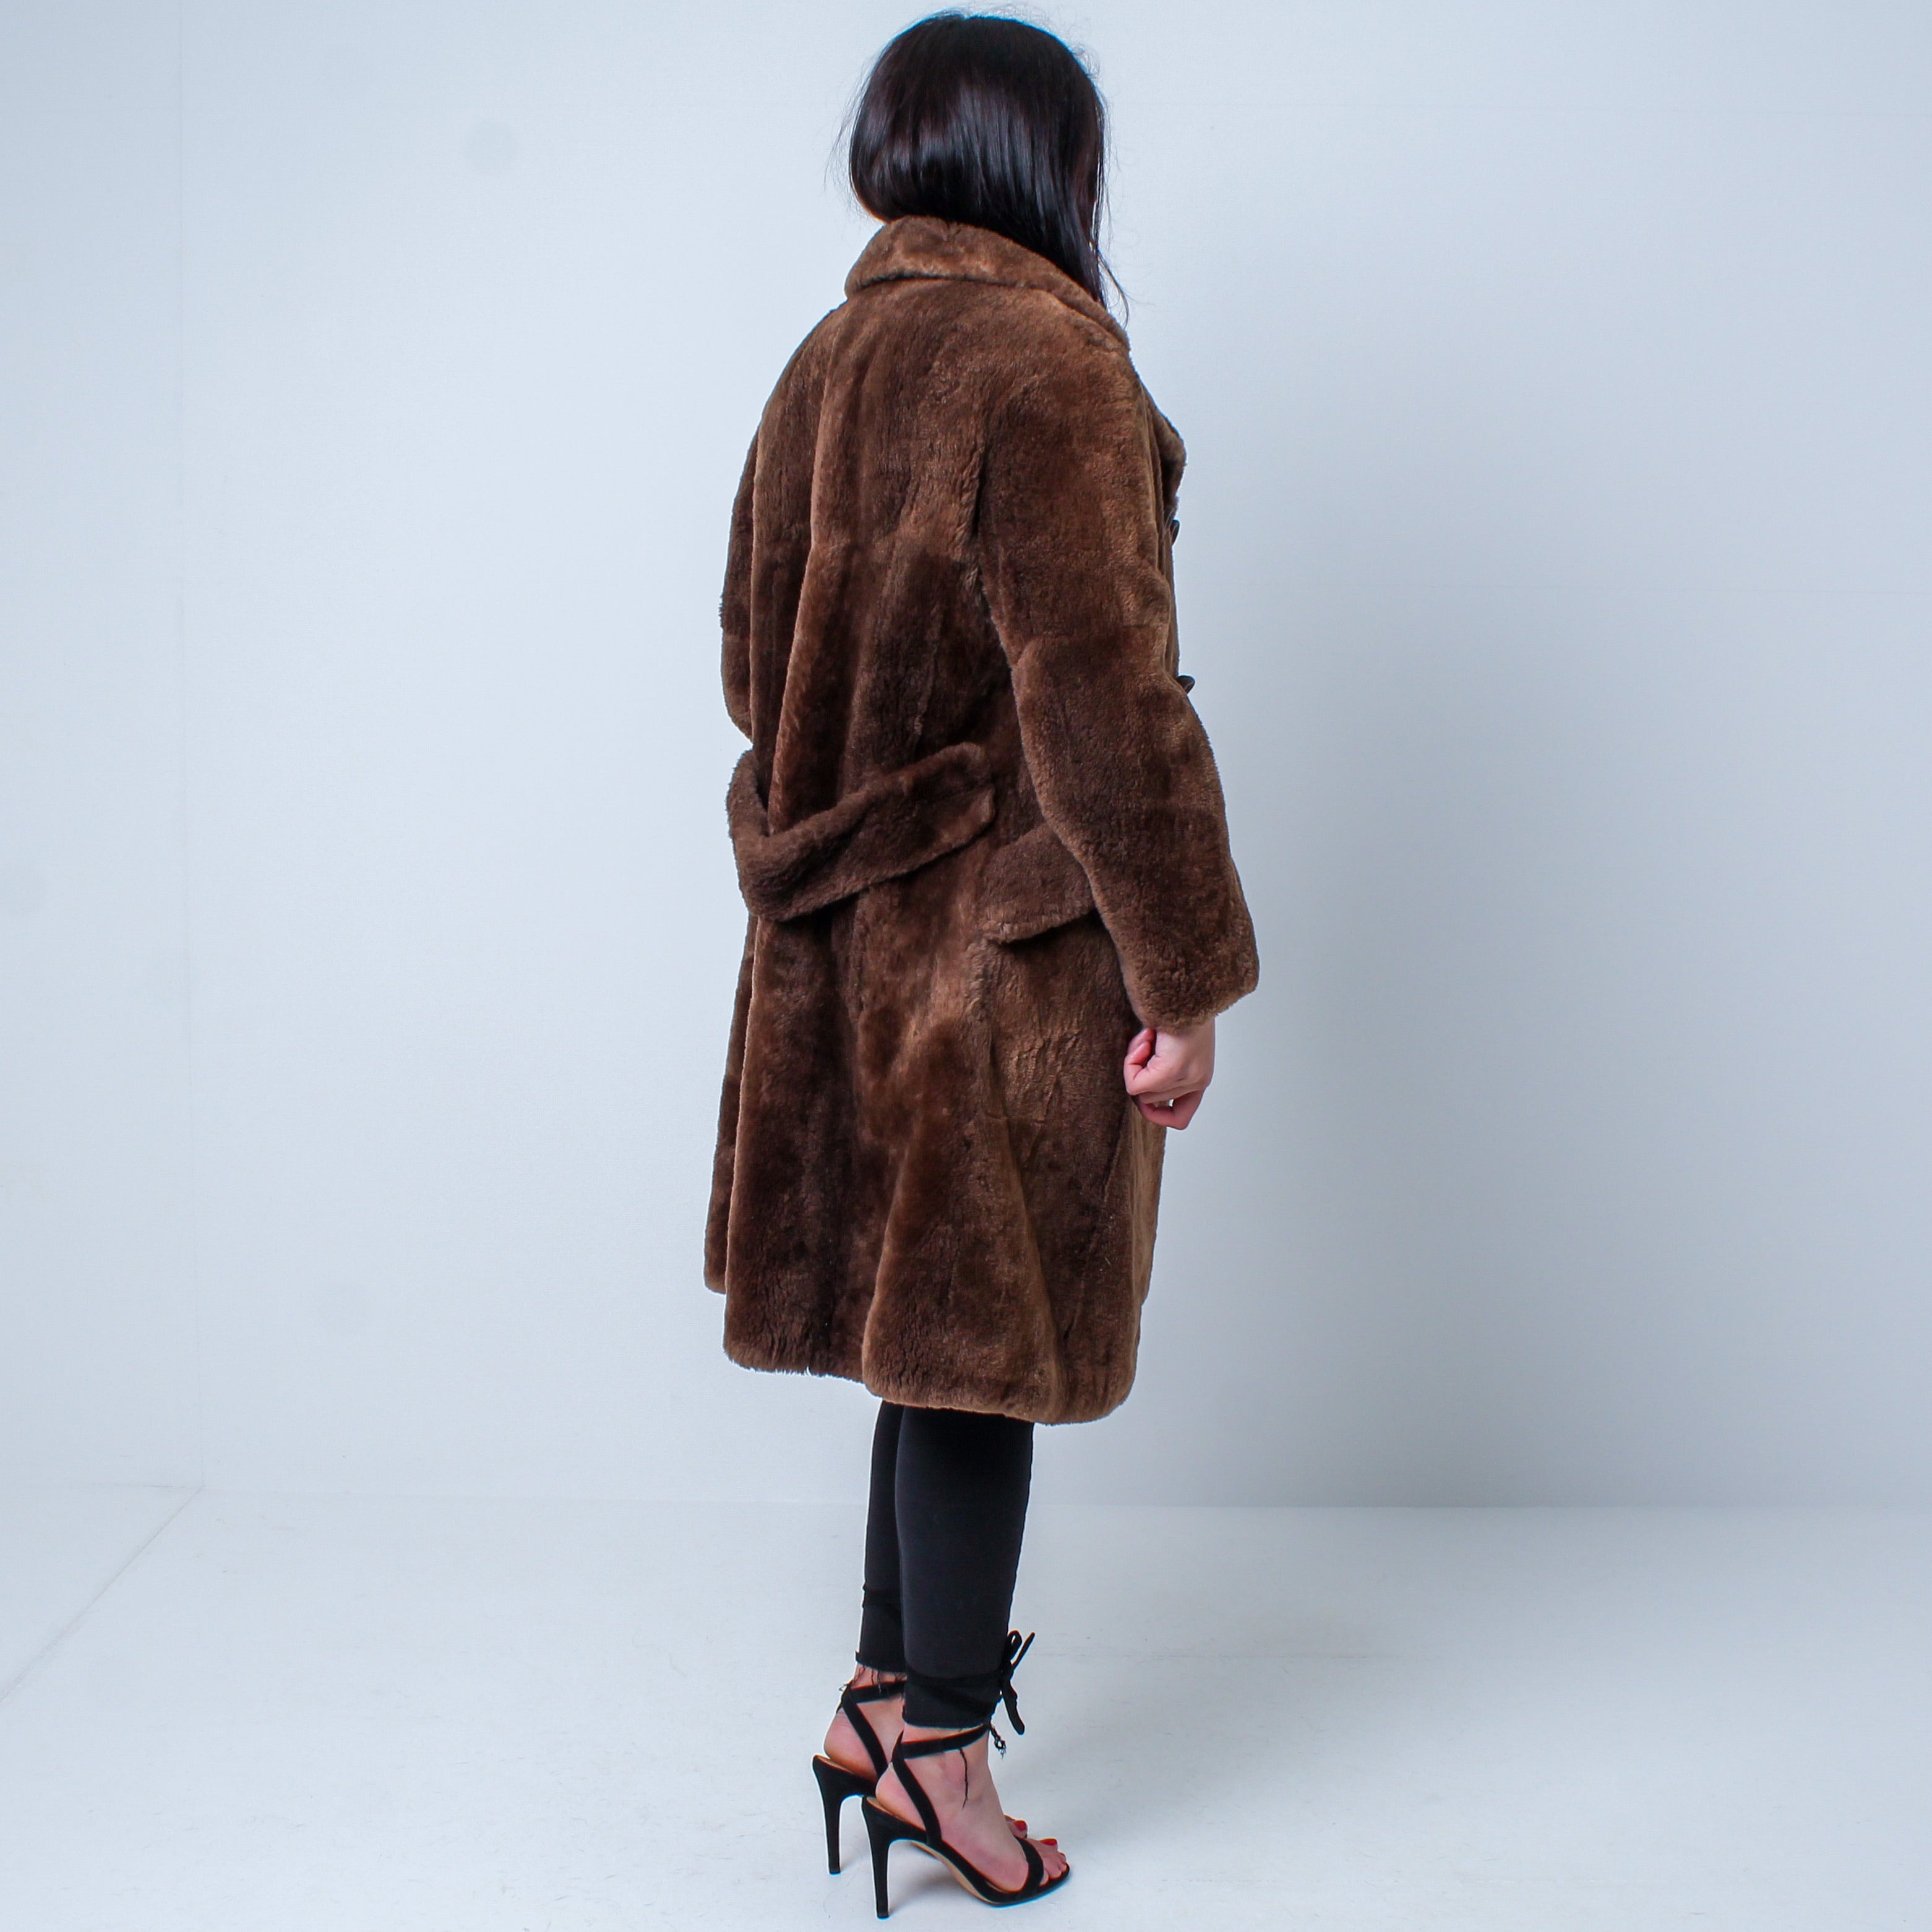 Women’s Full Length Vintage Natural Real Lamb Fur Coat Size: Medium-Large Women’s UK 12-16